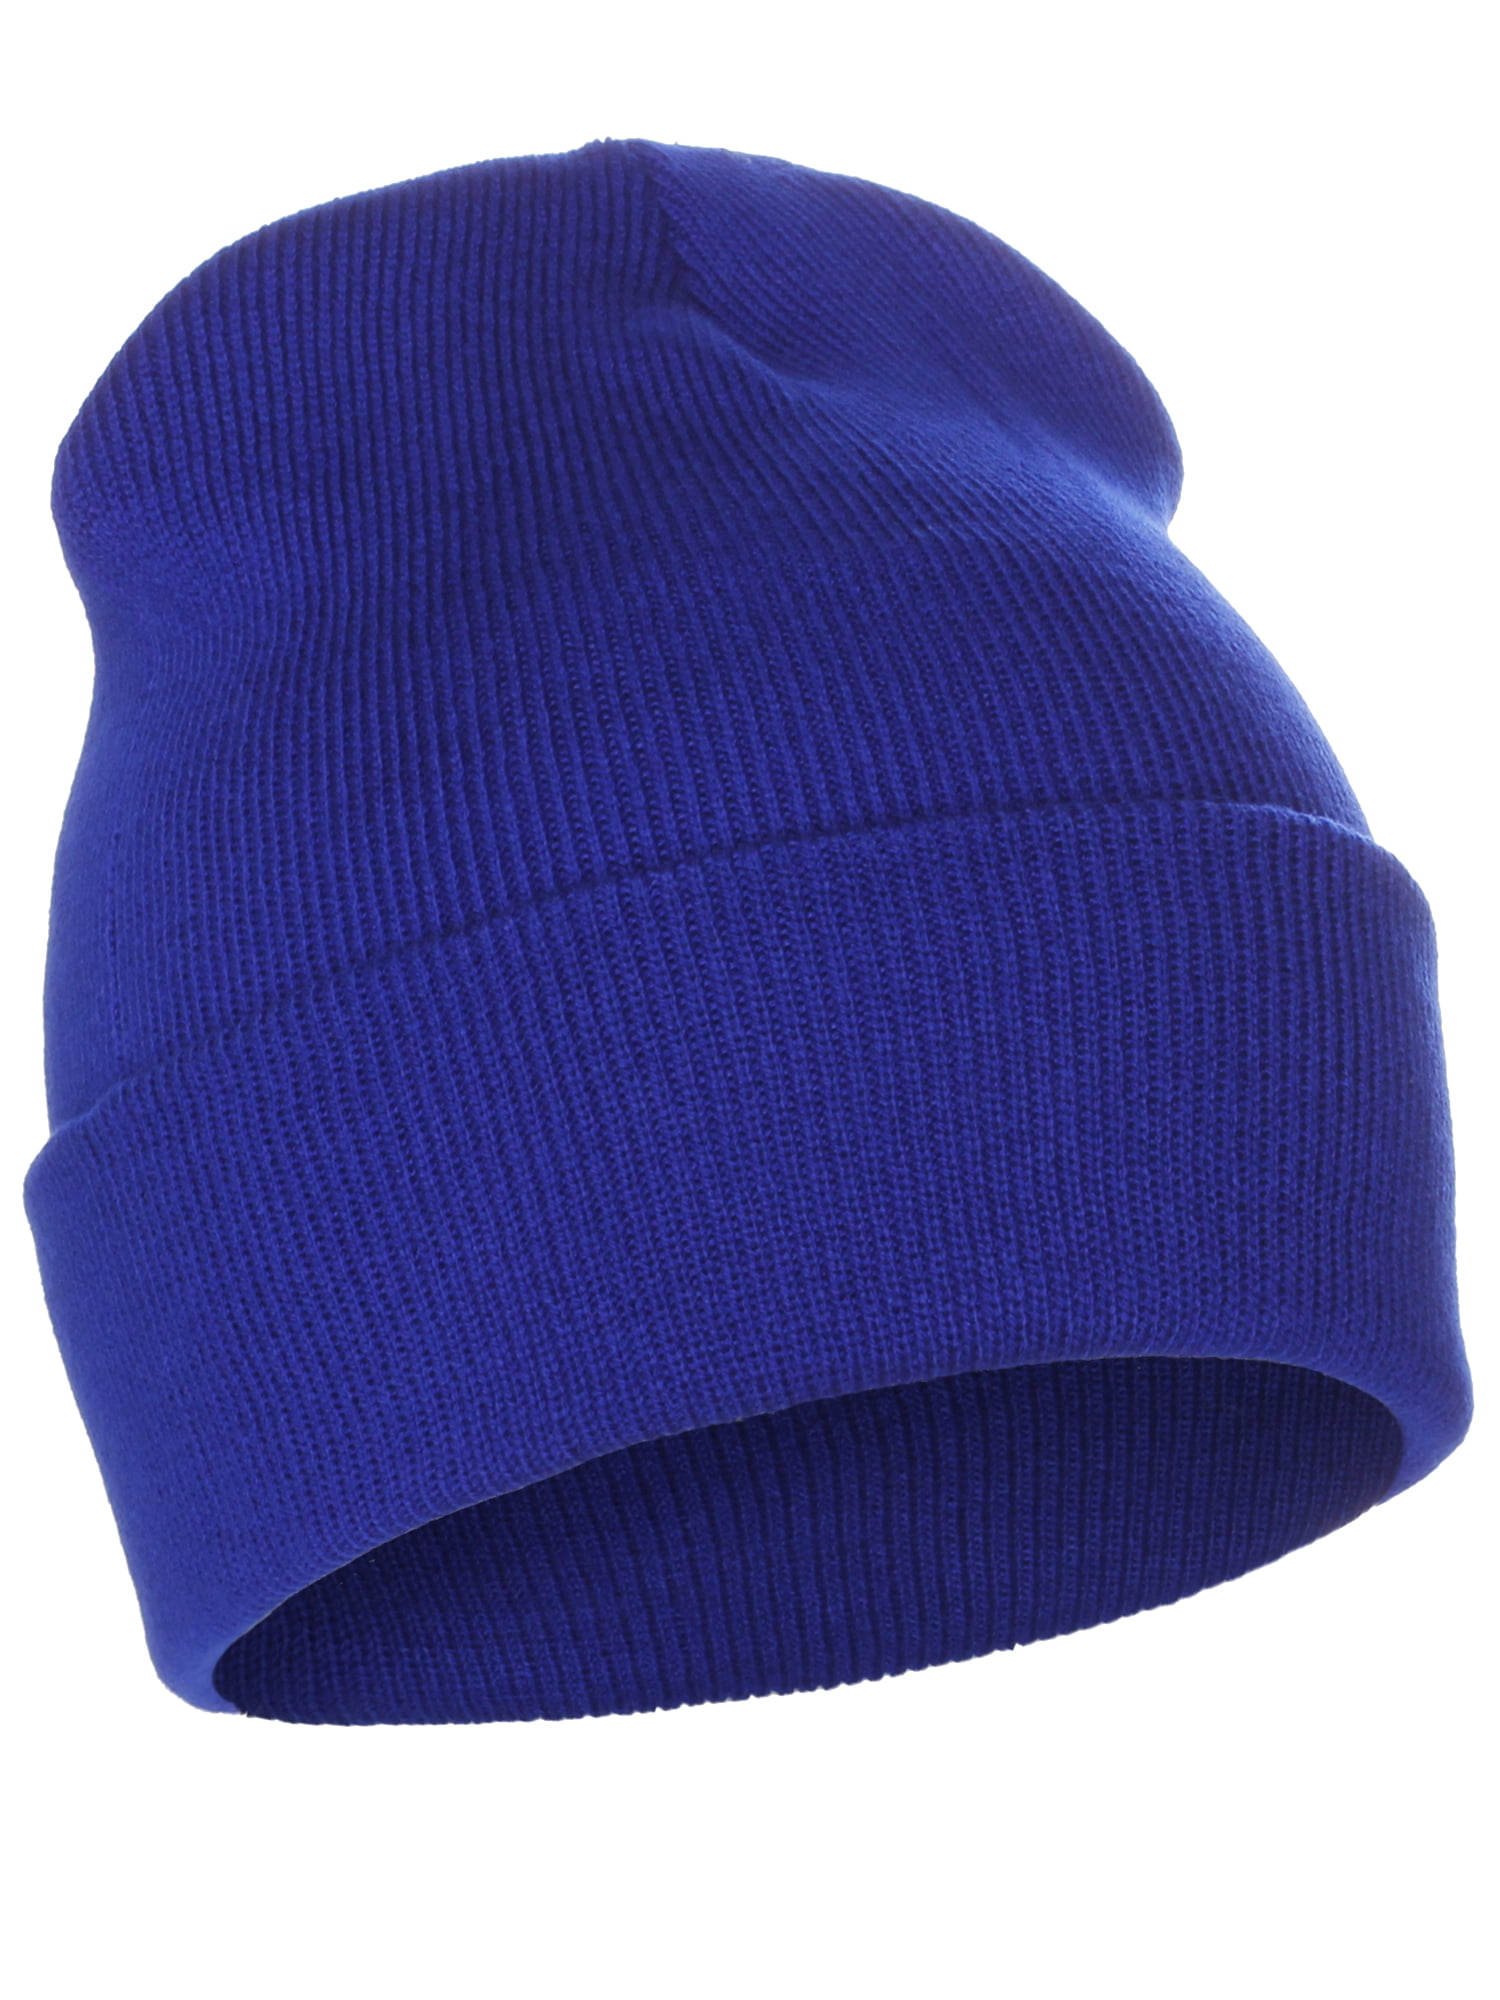 Beanie Knit Hats Skull Caps Funny Kangaroo Geometric Unisex RoyalBlue